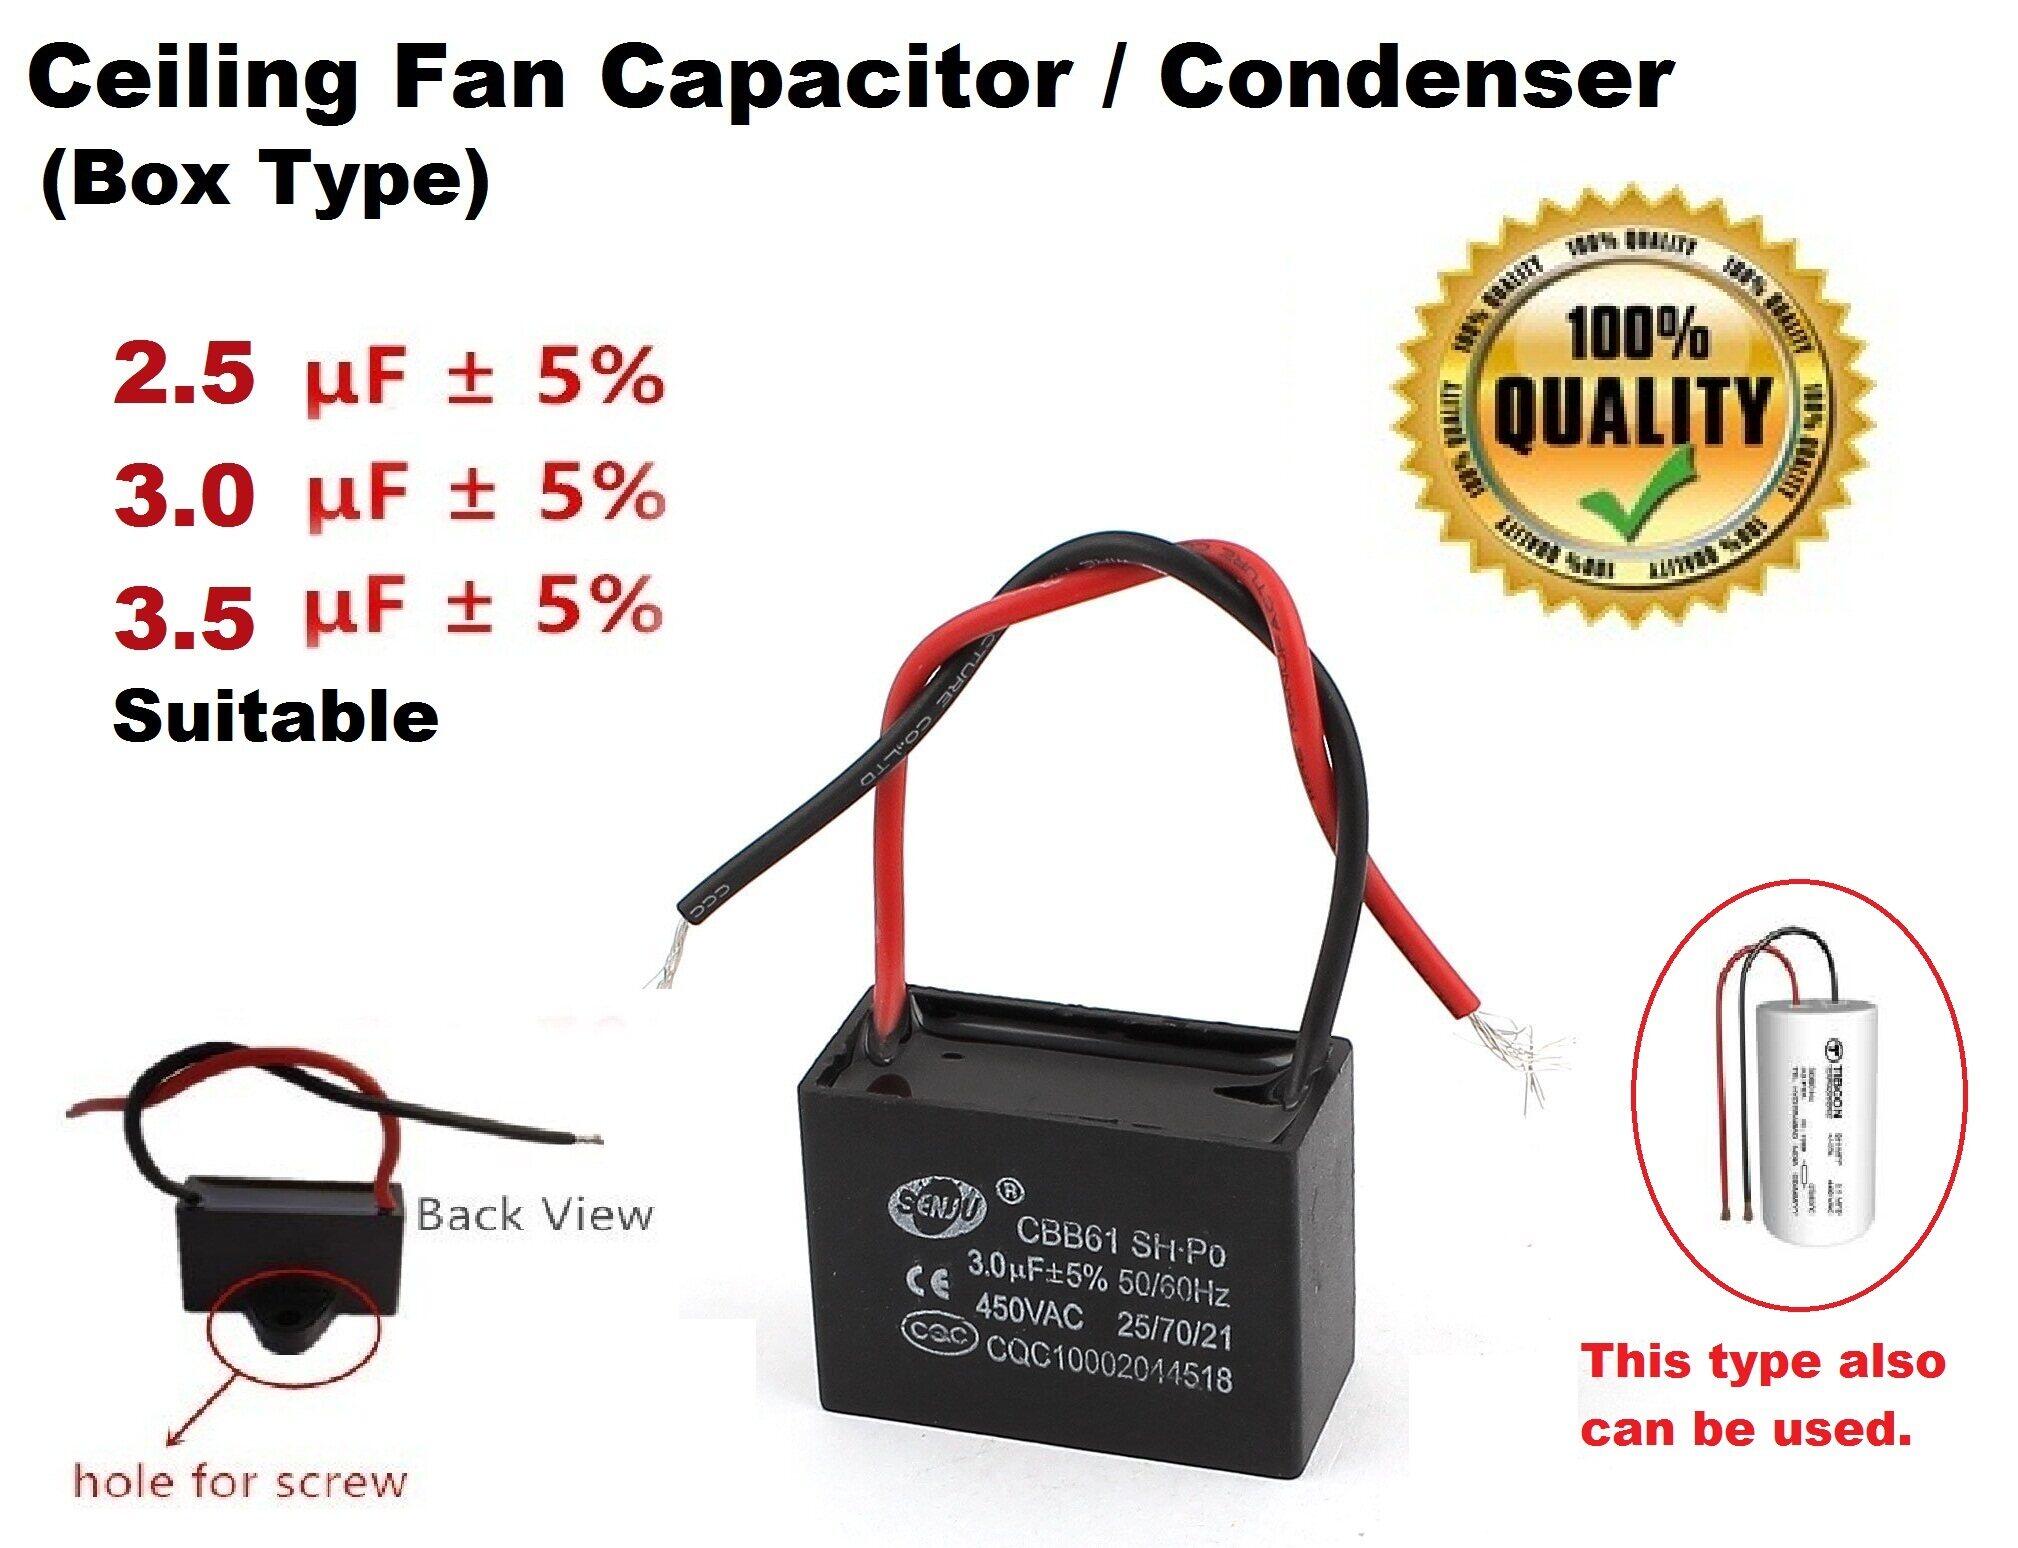 Ceiling Fan Capacitor Condenser 3 0uf